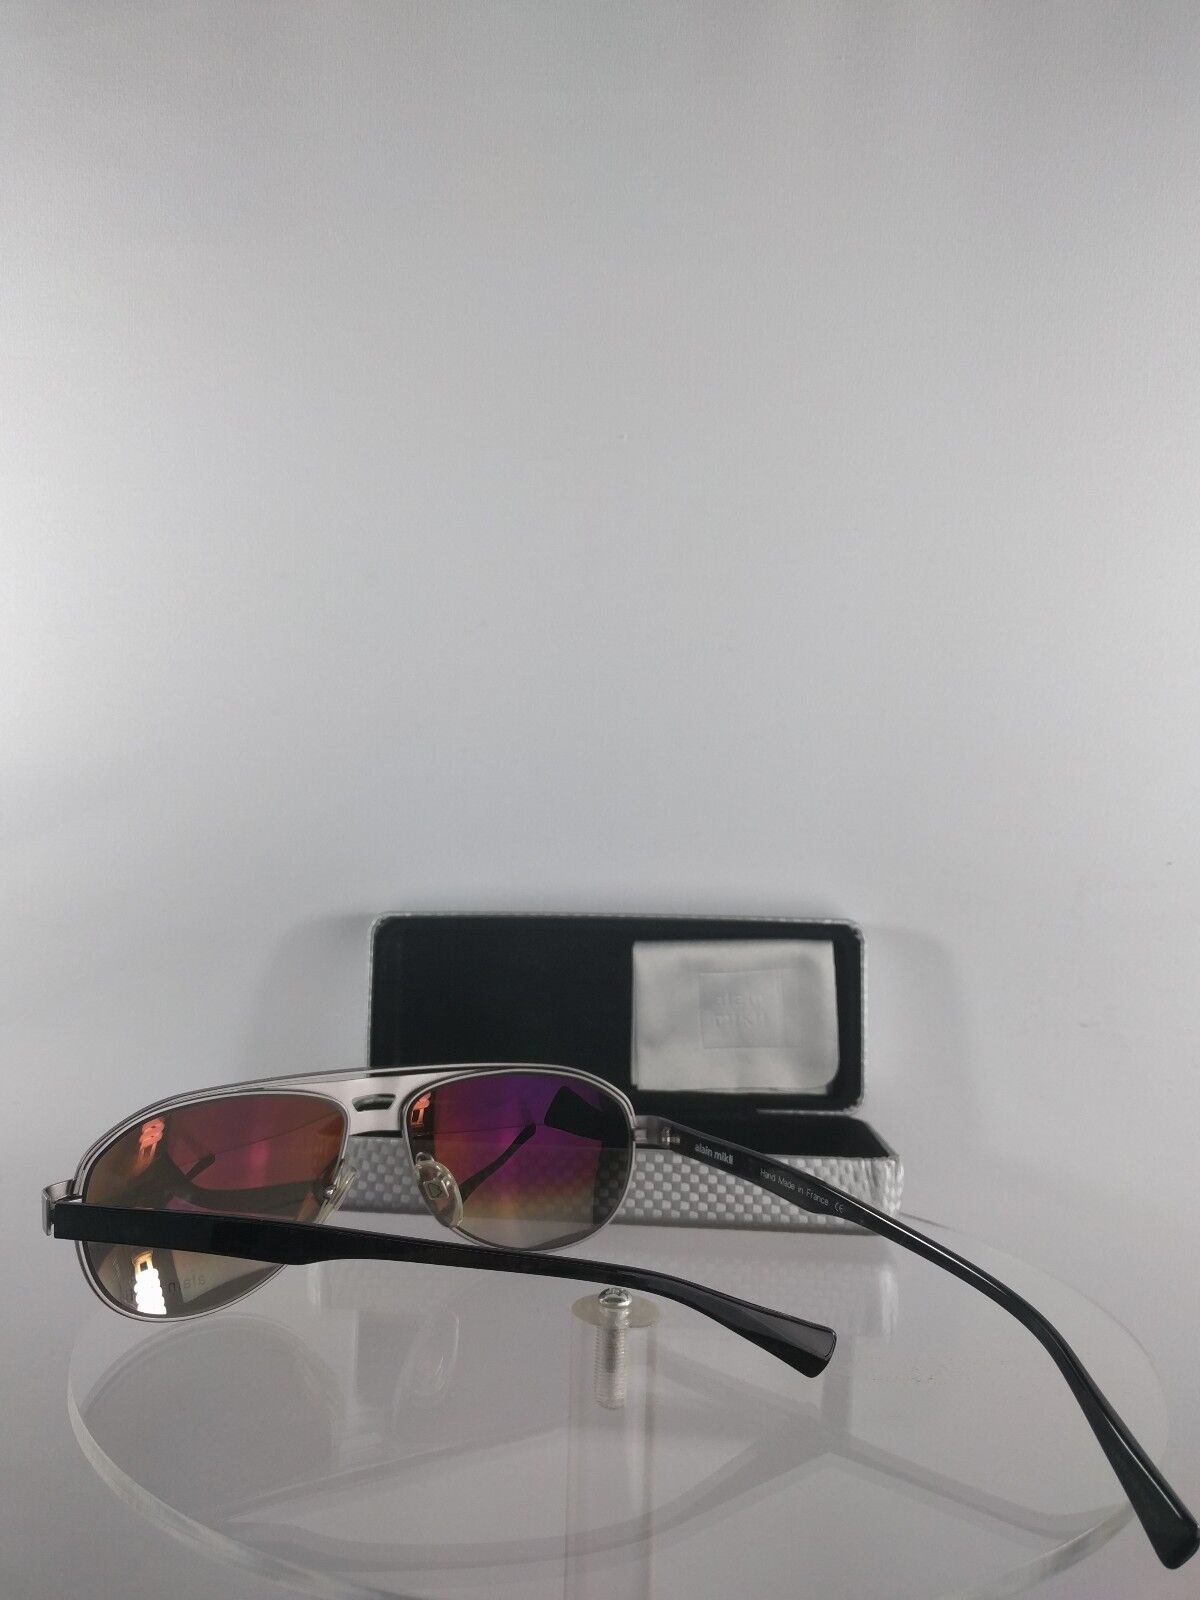 Brand New Authentic Alain Mikli Sunglasses AL 1207 MO41 1520 Aviator Frame